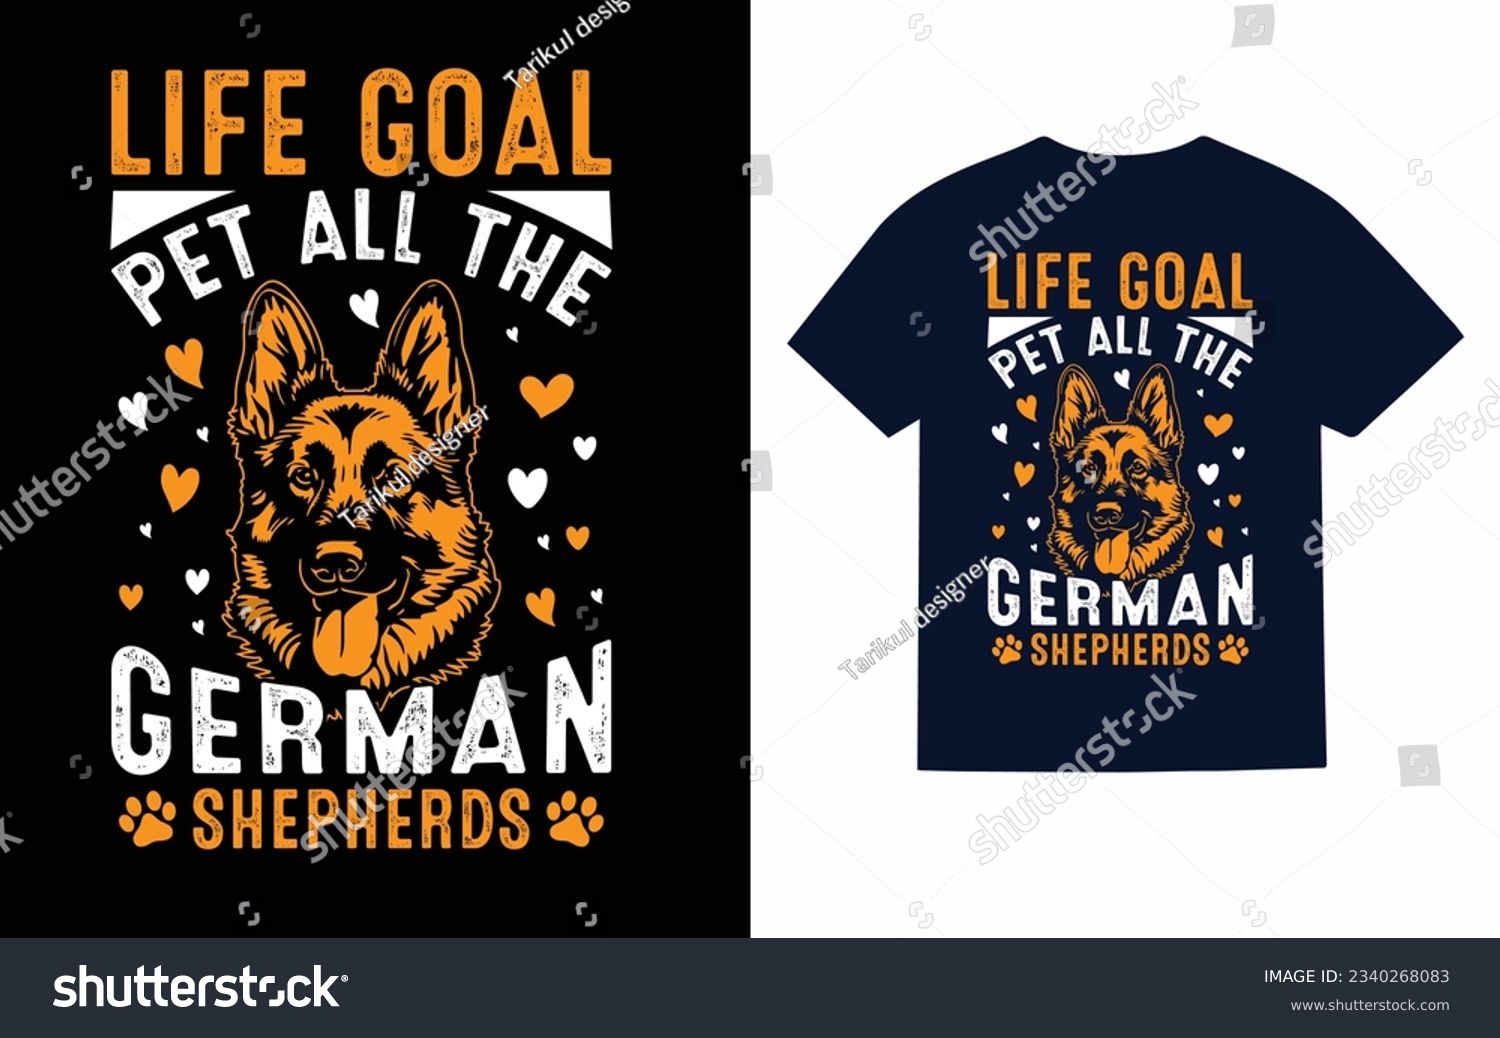 SVG of life goal pet all the german, shepherd dog typograthy t-shirt design svg